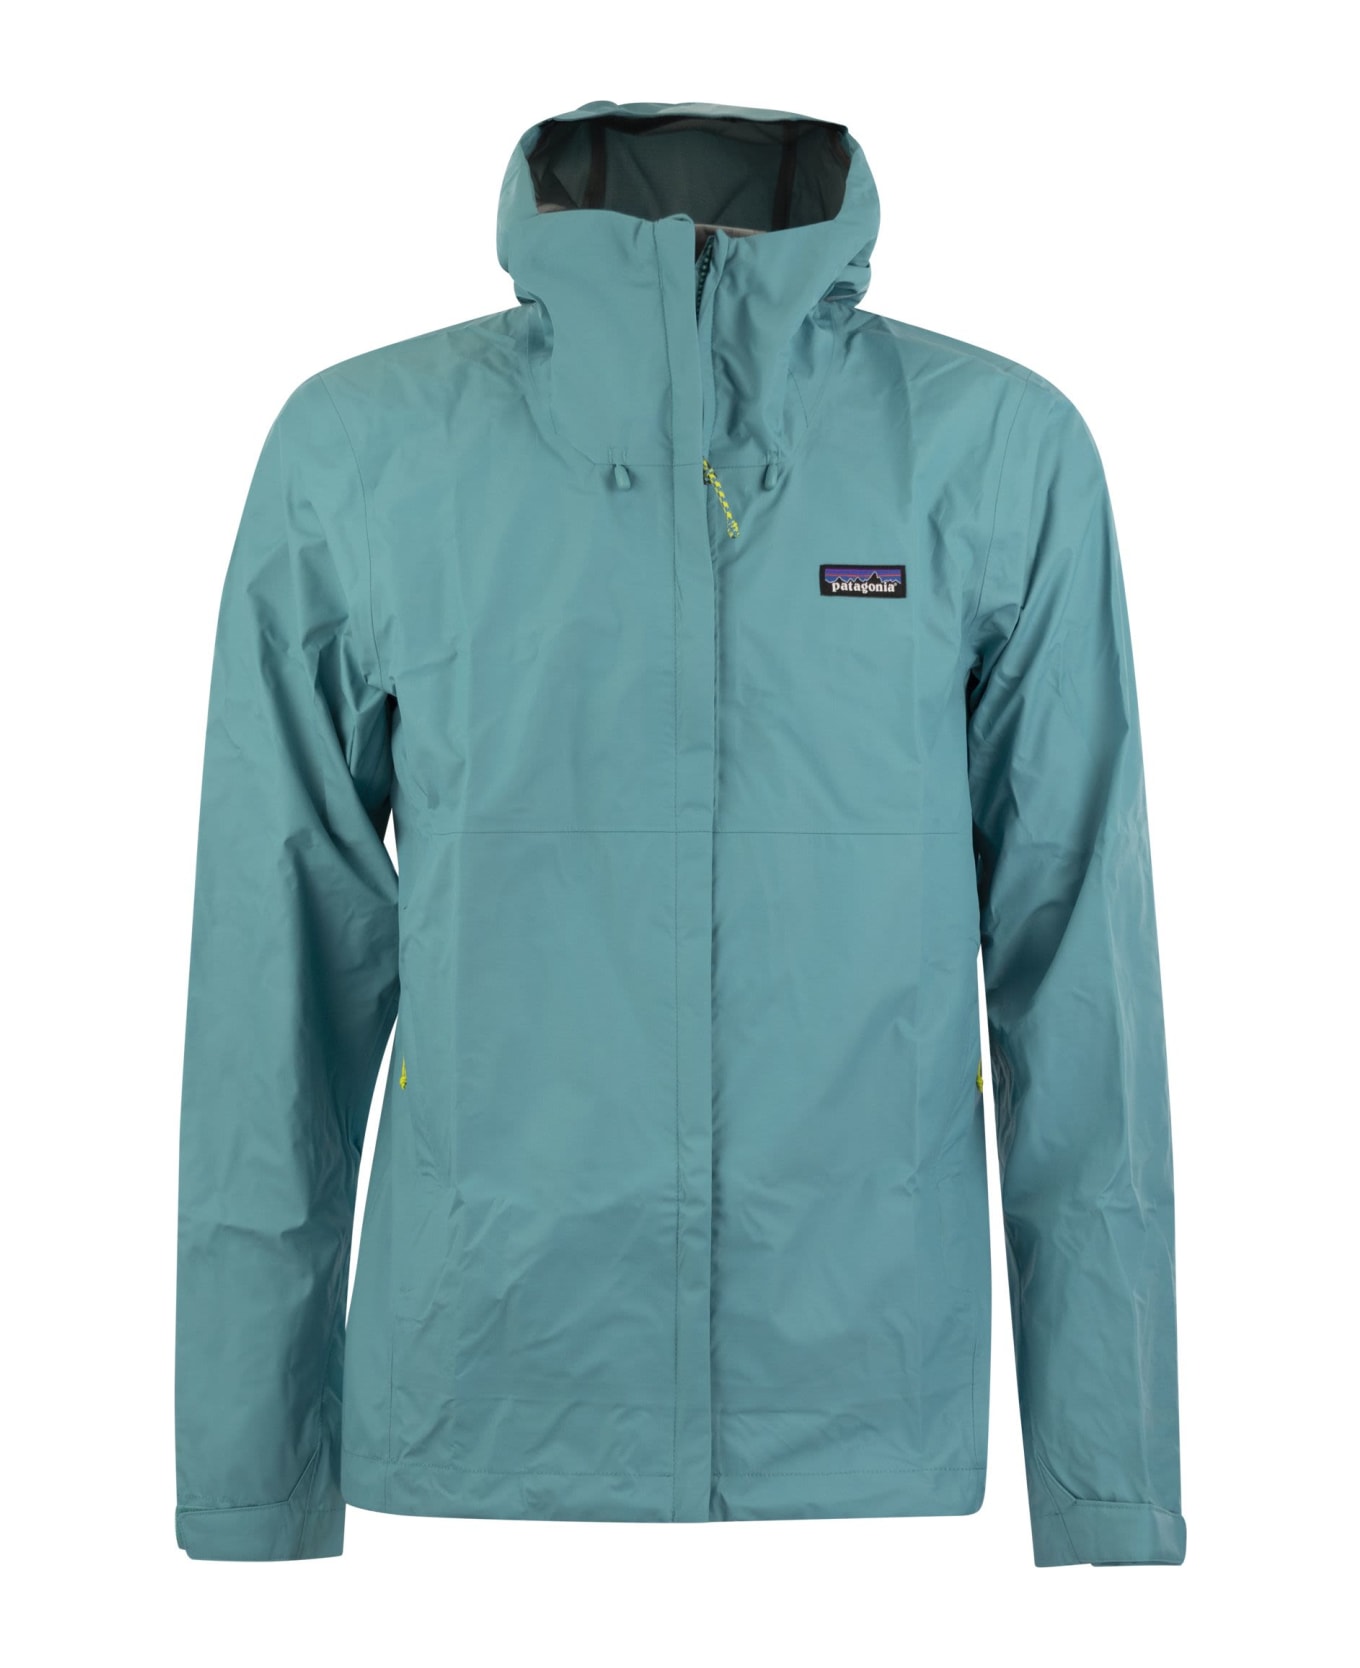 Patagonia Nylon Rainproof Jacket - Light Blue ジャケット